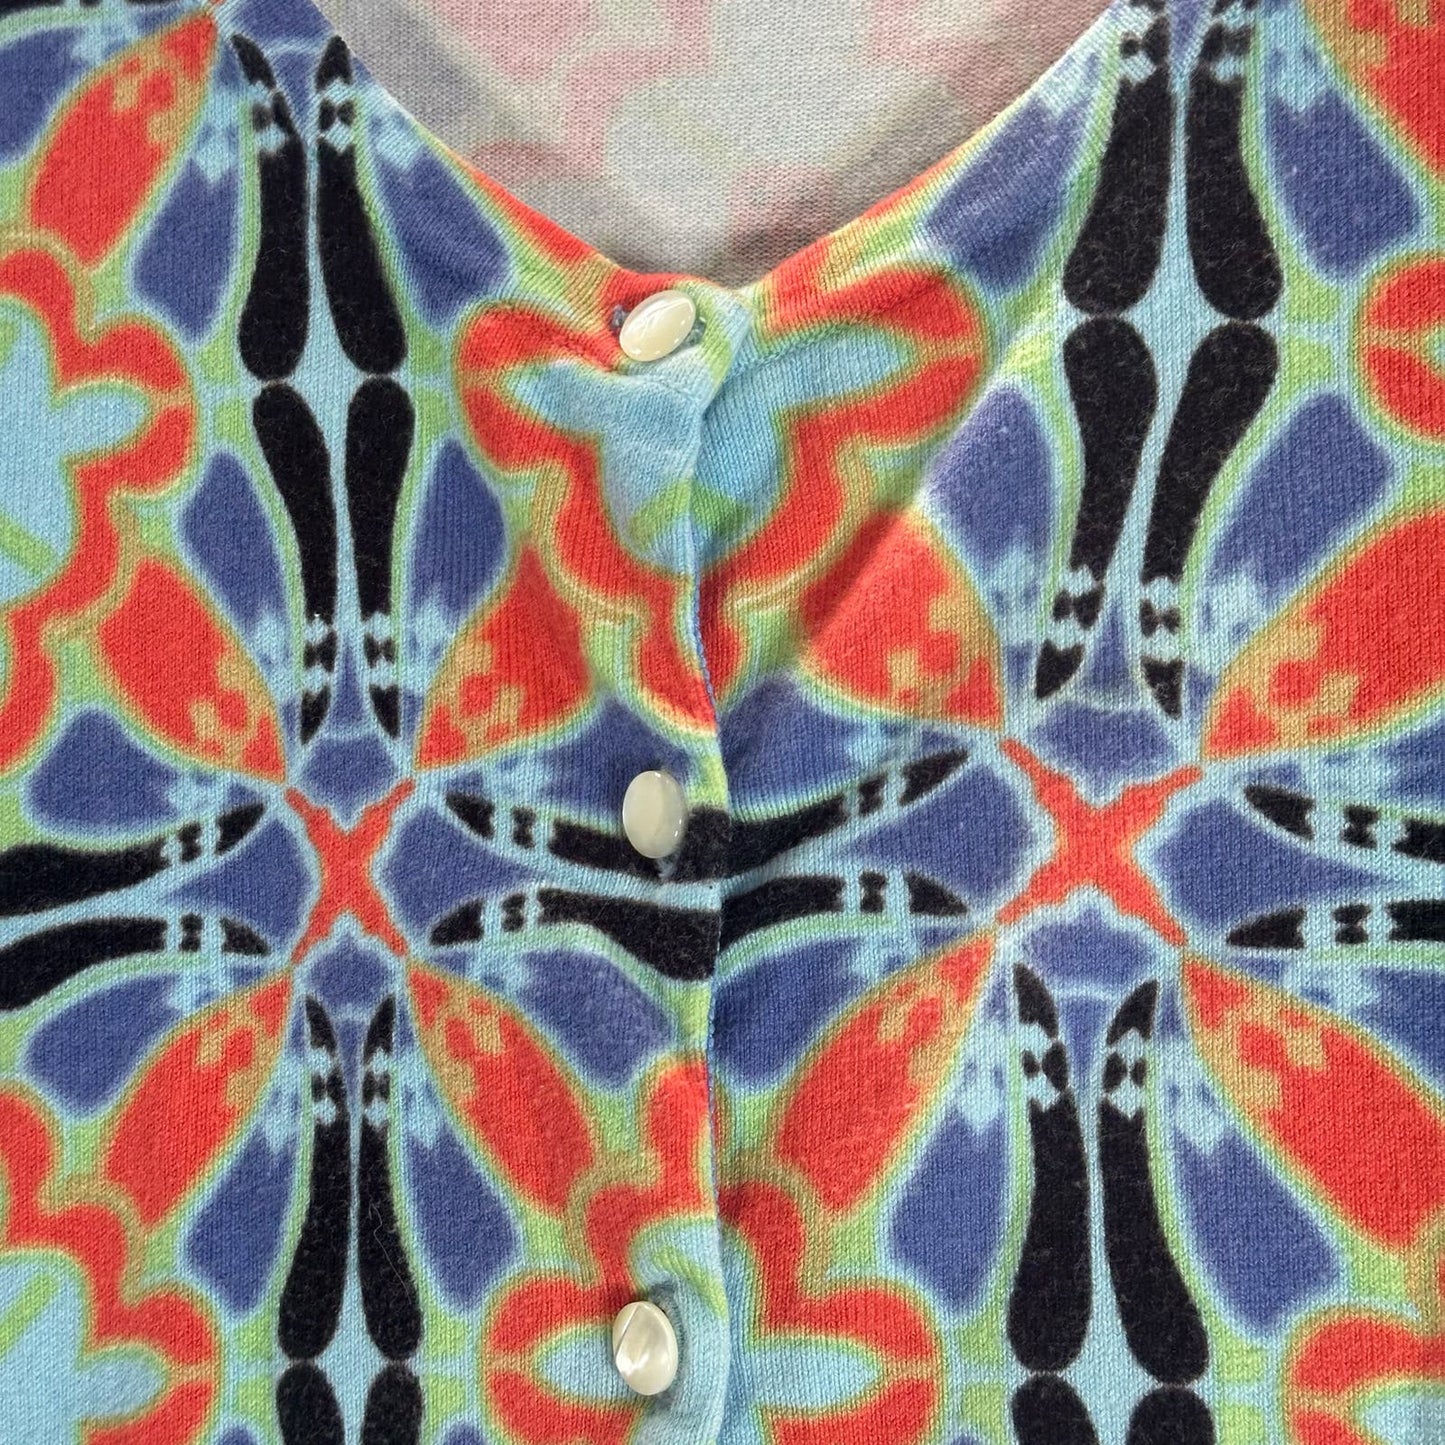 J. MCLAUGHLIN Women's Multi Mosaic Print Button-Up Cardigan Sweater SZ M